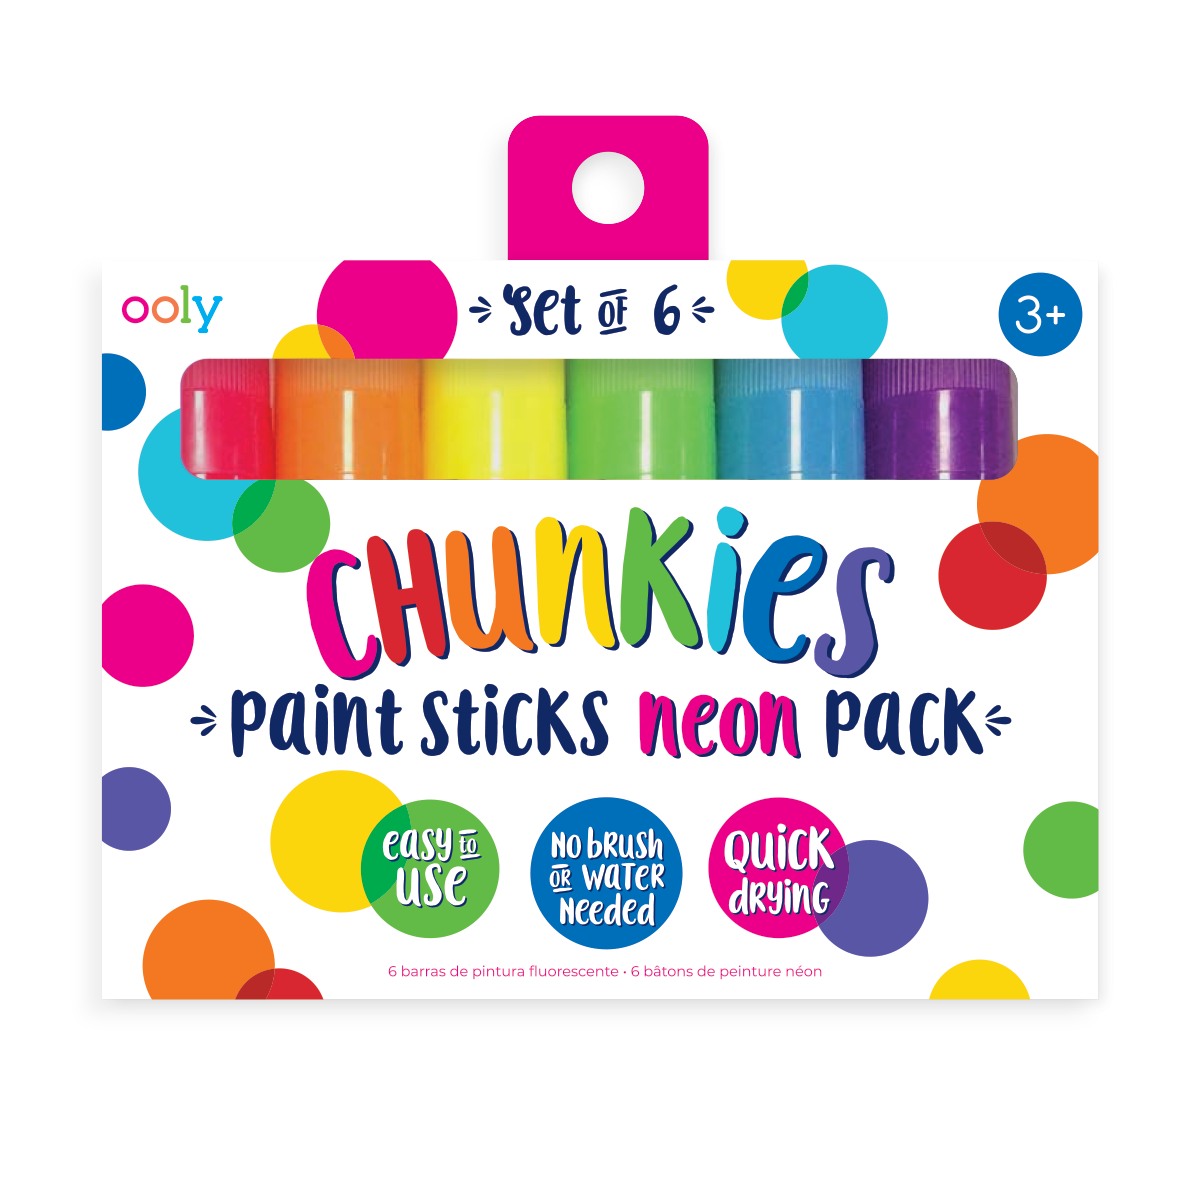 Chunkies Paint Sticks (Classic Set of 12) – Oh Happy Fry